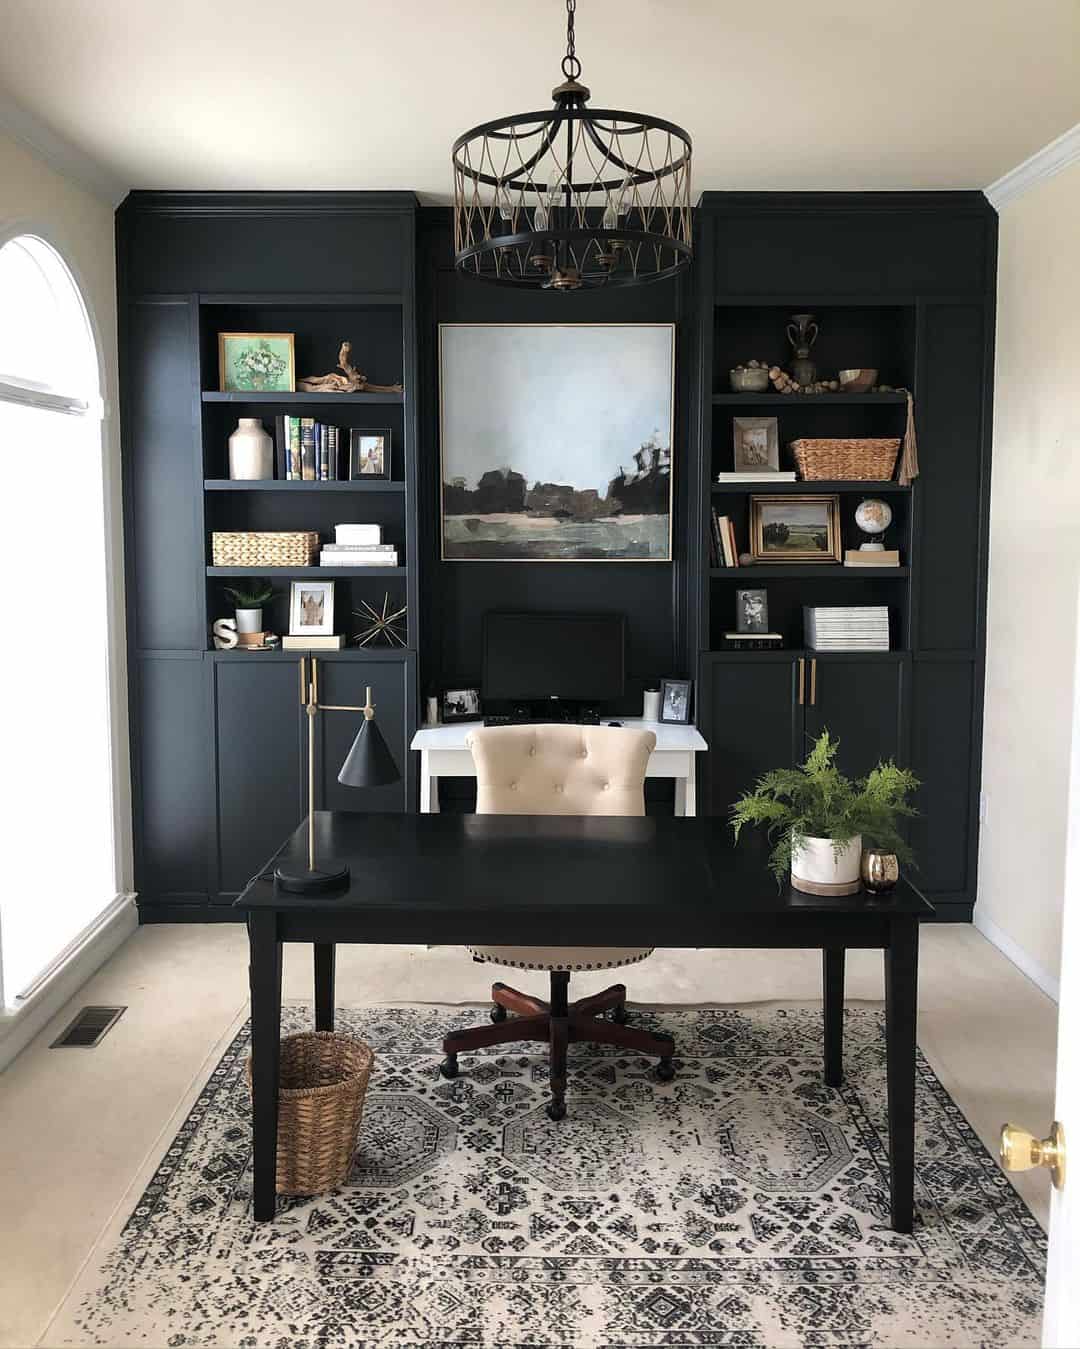 Home Office With Black Built-in Shelves - Soul & Lane